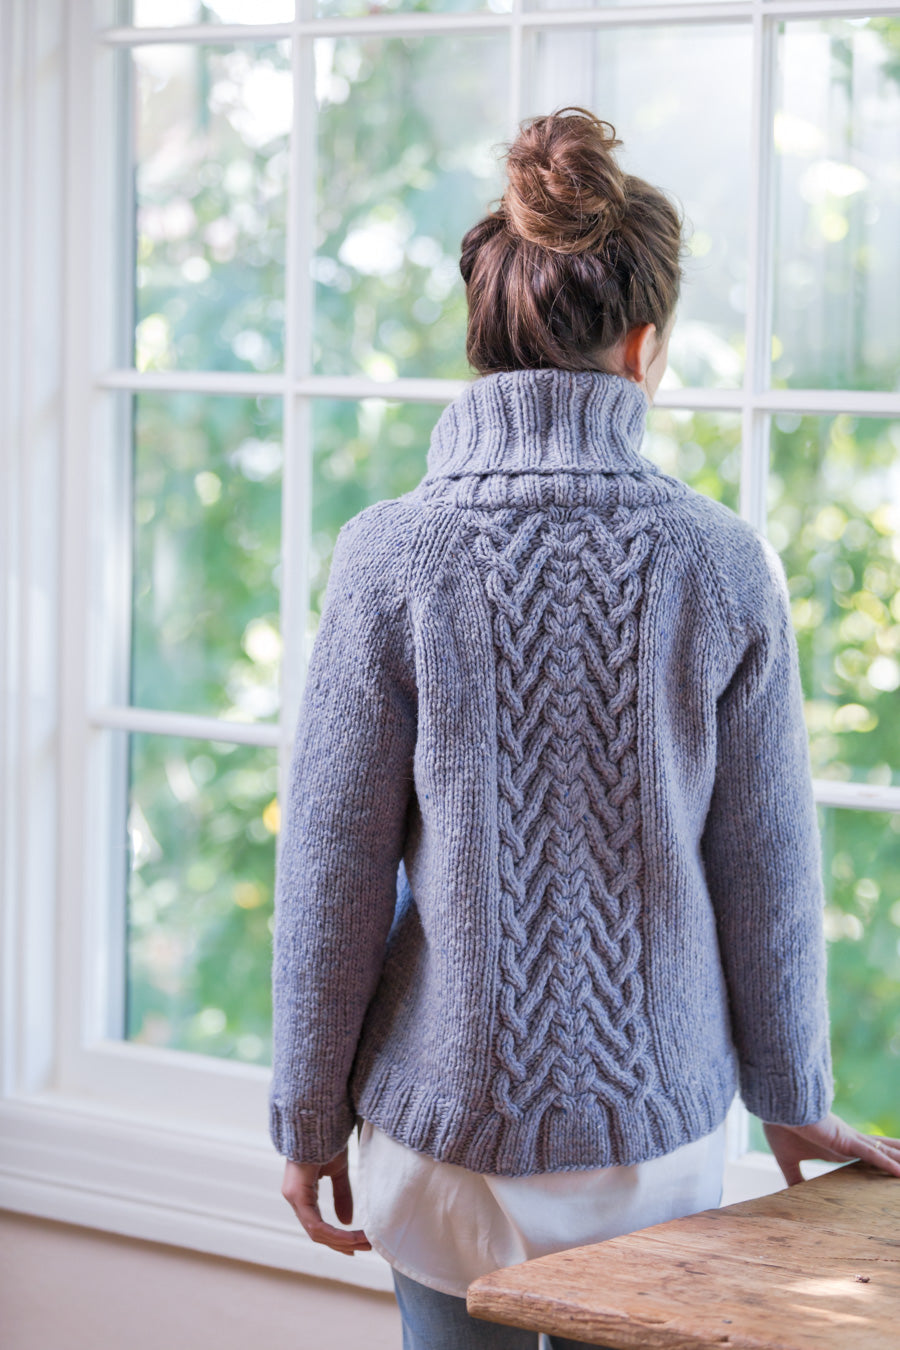 Knitting Brooklyn Michele Tweed | by Bingham Wang | Pullover Pattern